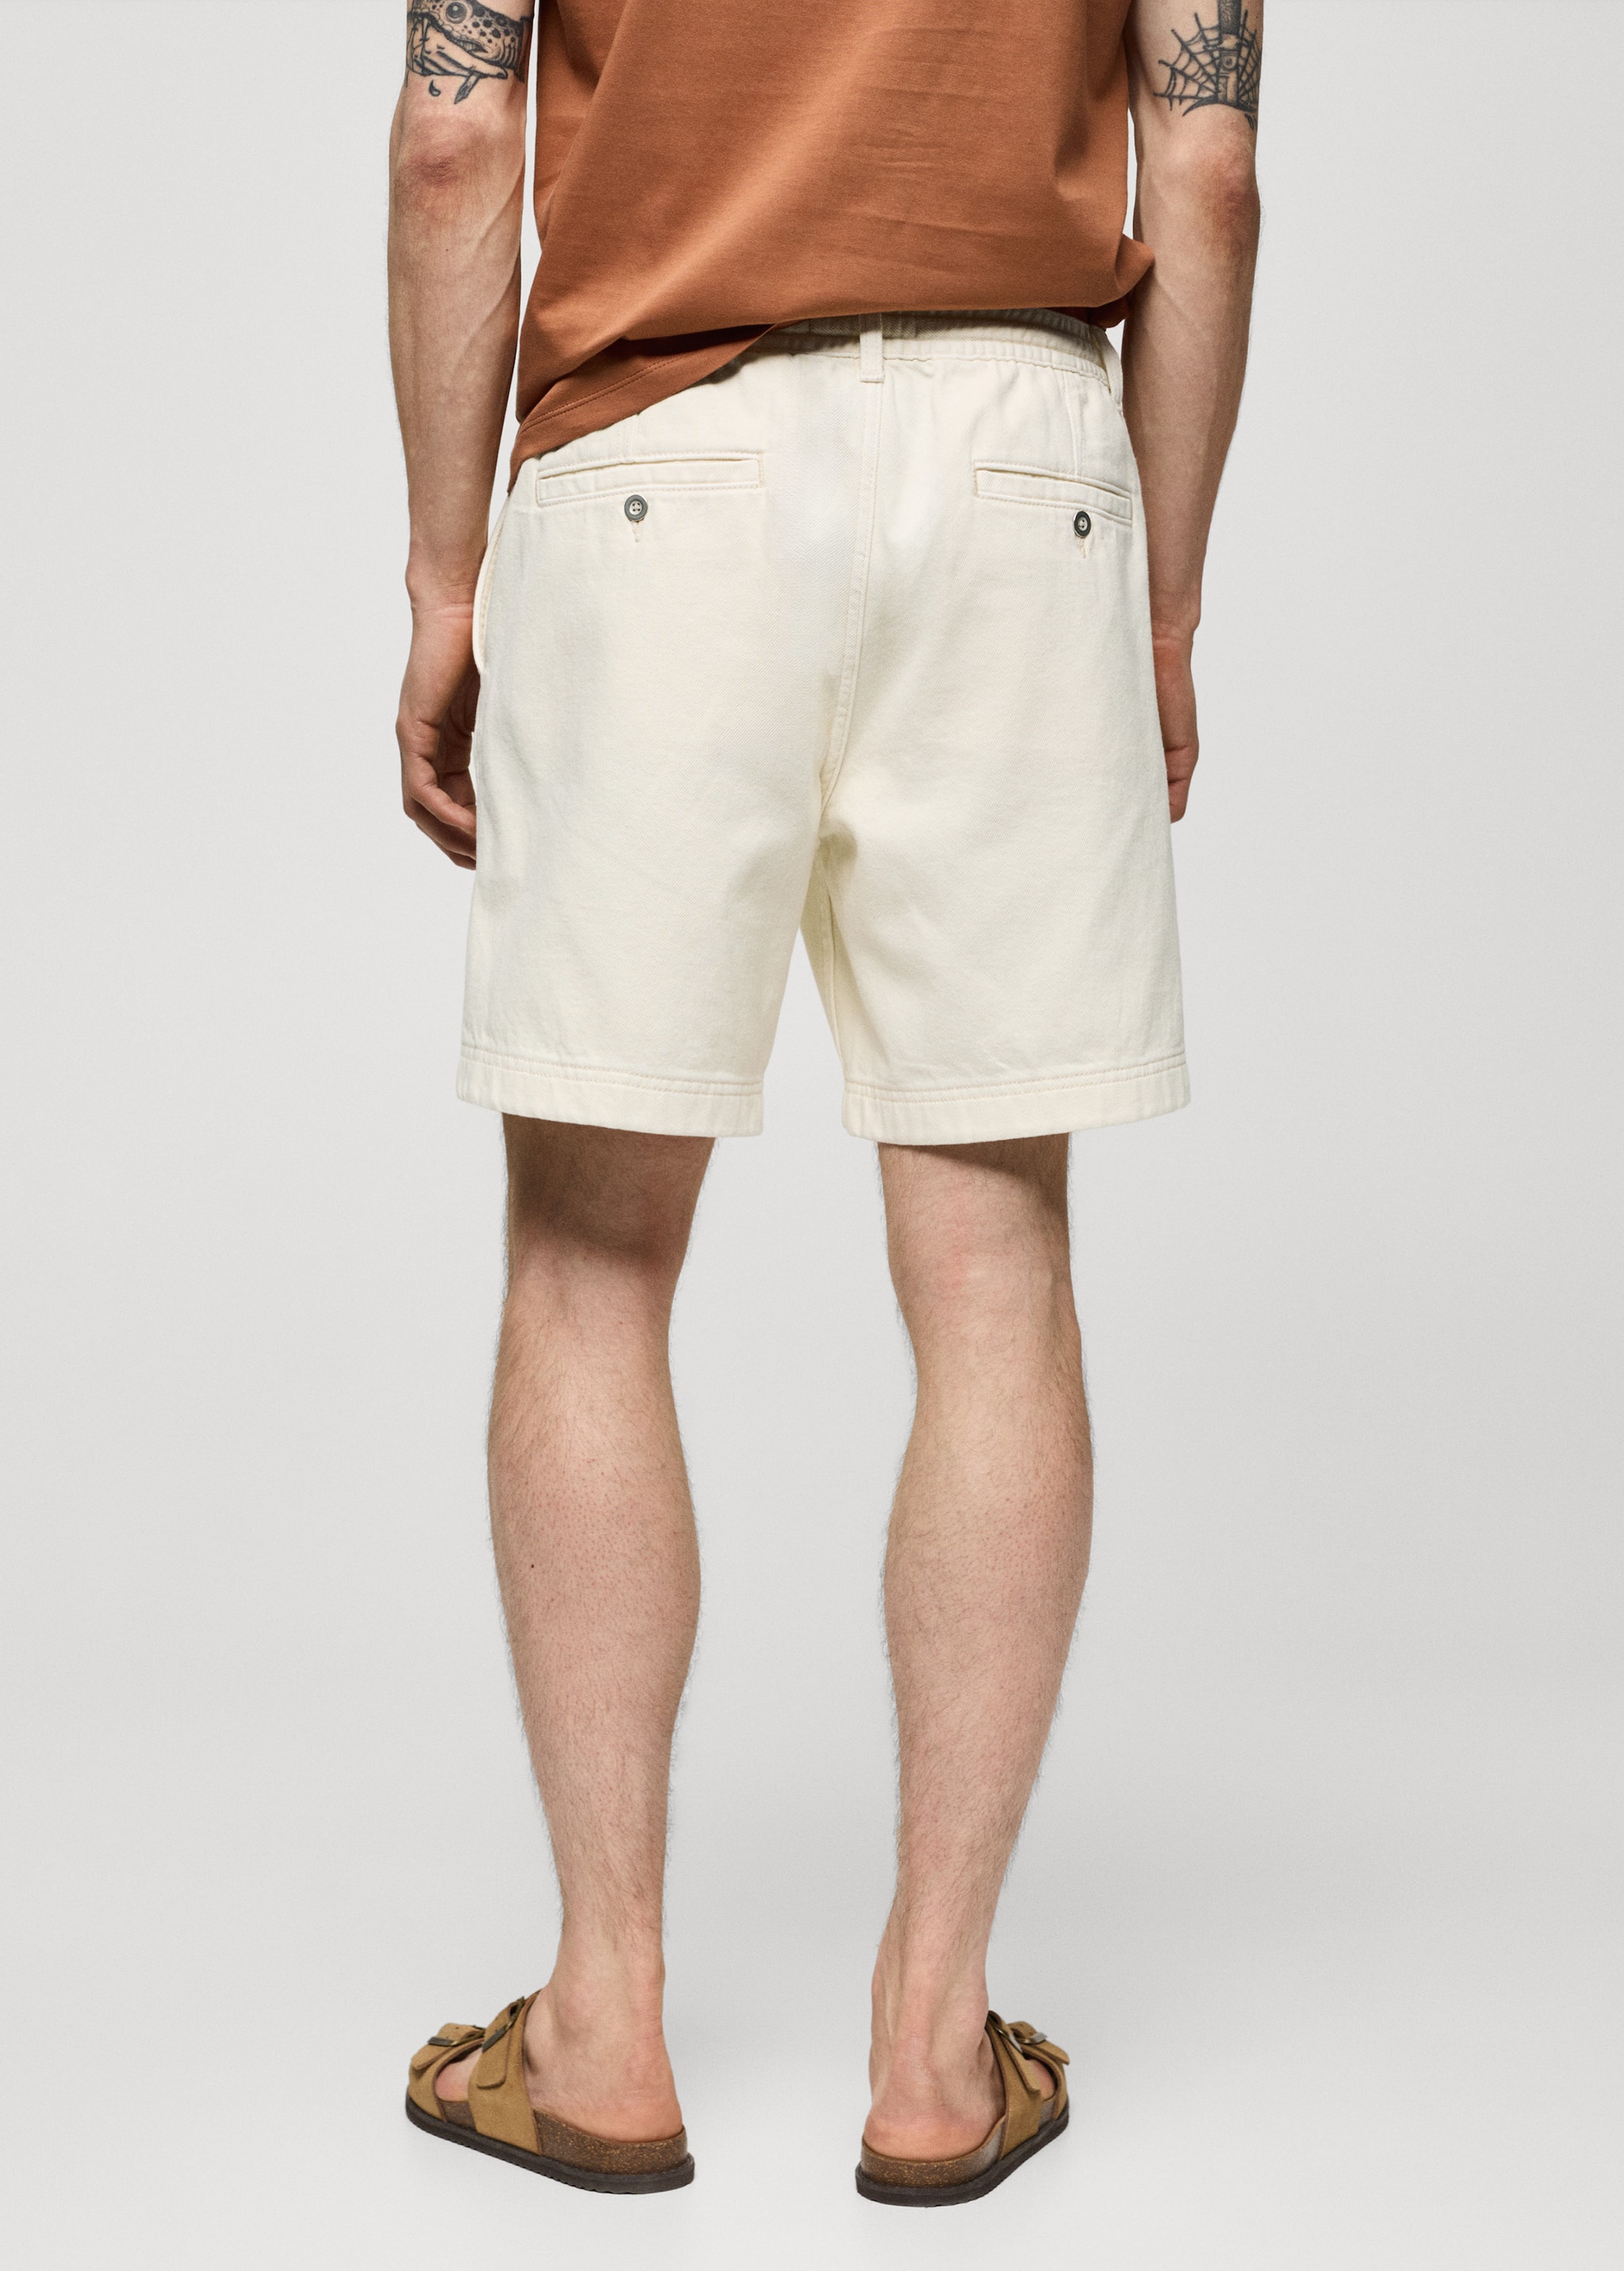 100% cotton drawstring Bermuda shorts - Reverse of the article